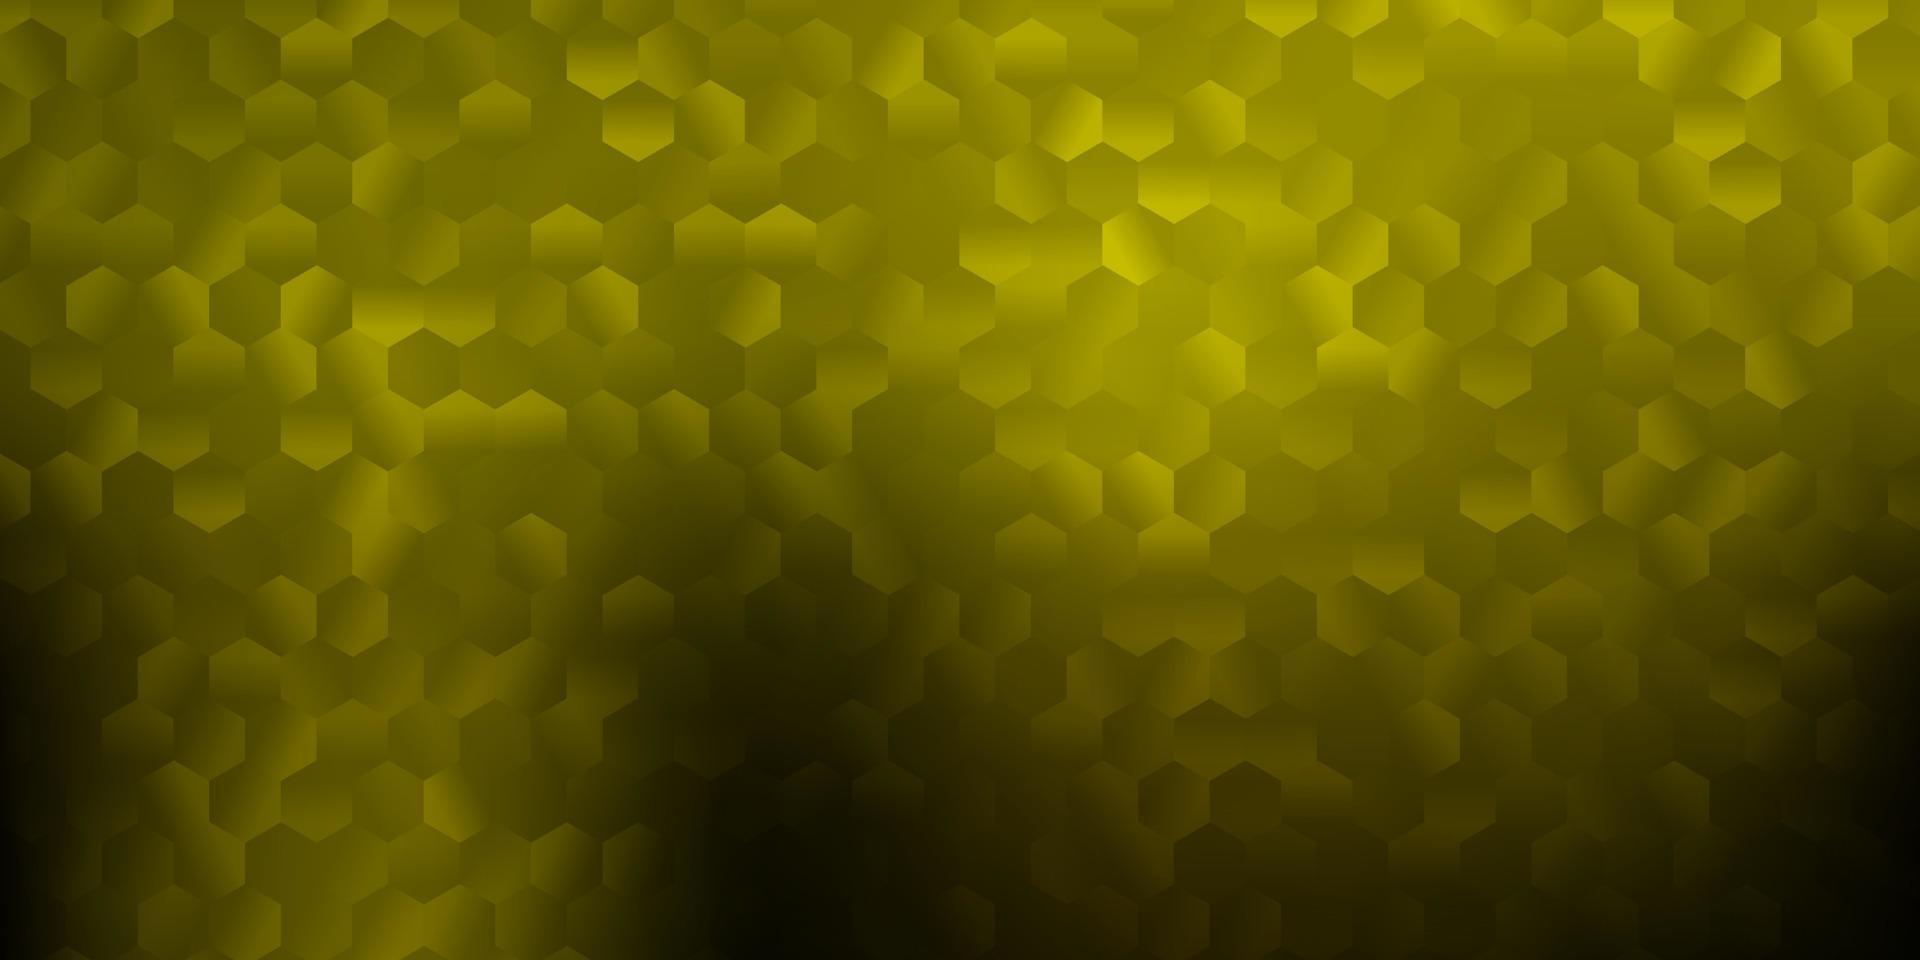 textura de vector verde oscuro, amarillo con hexágonos de colores.